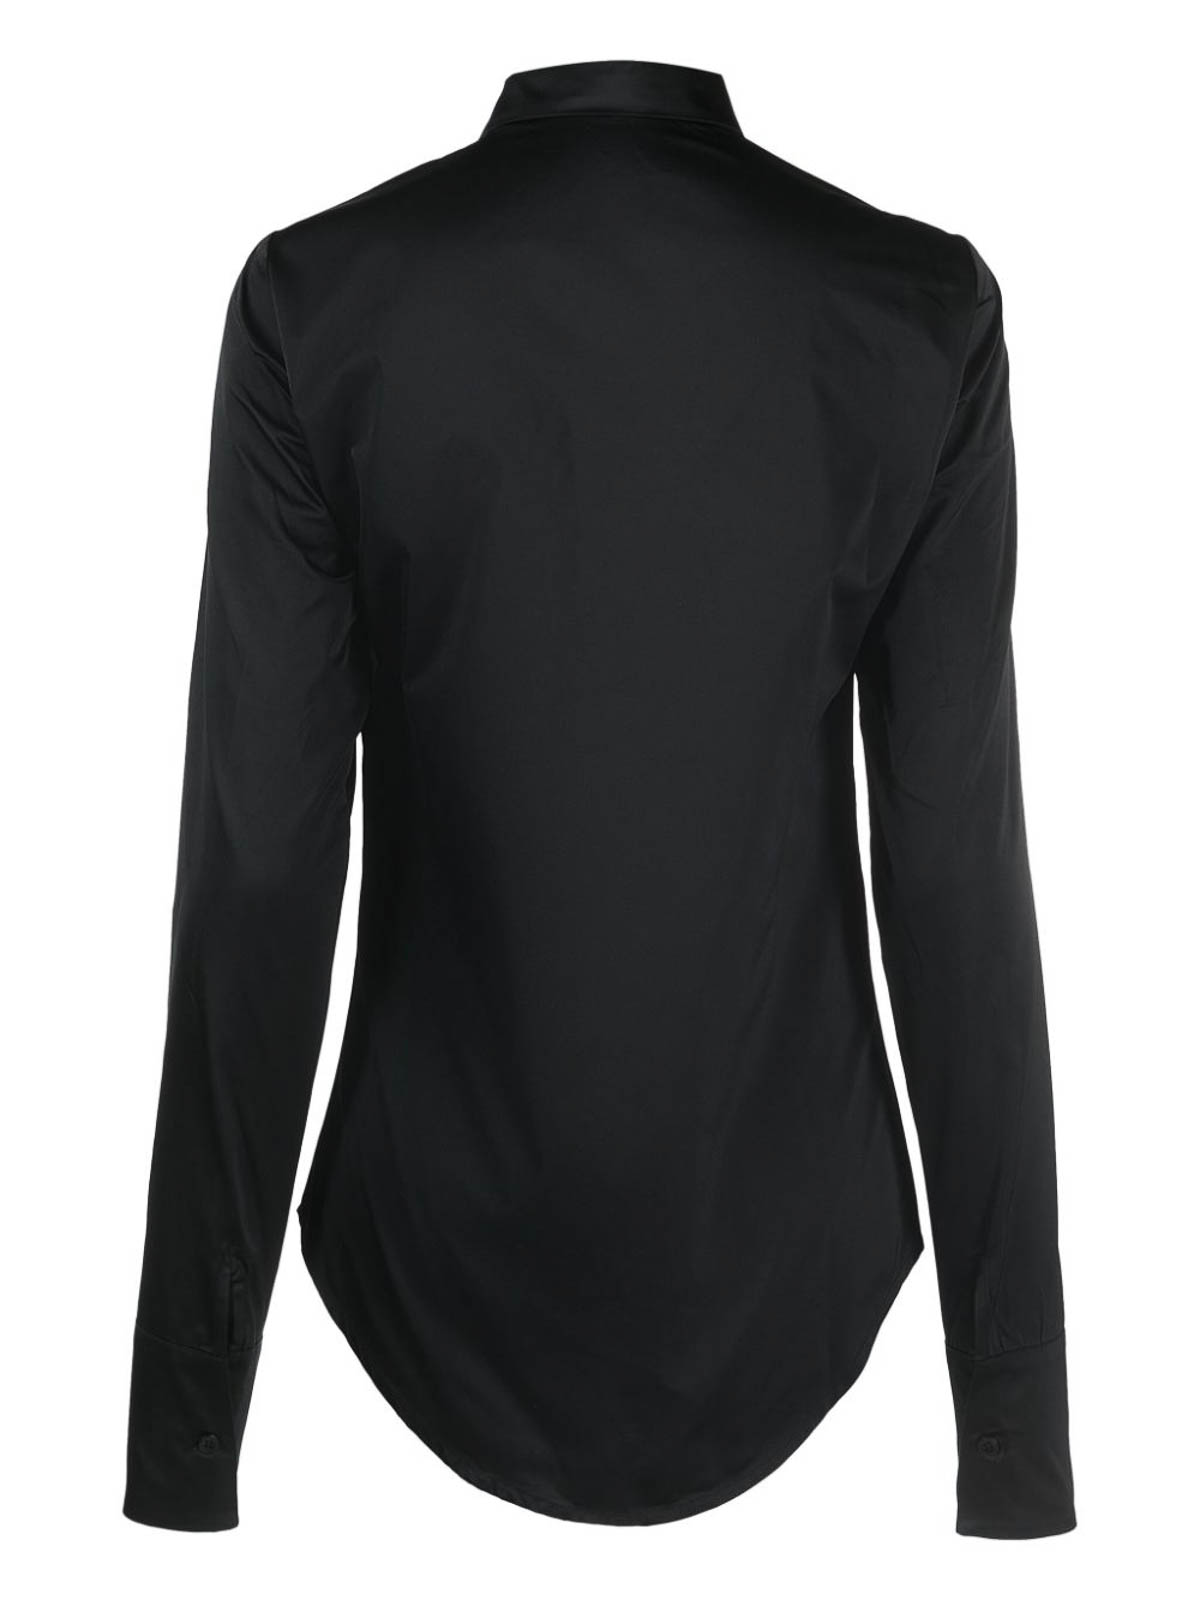 Solid Black Denim Shirts - Buy Solid Black Denim Shirts online in India